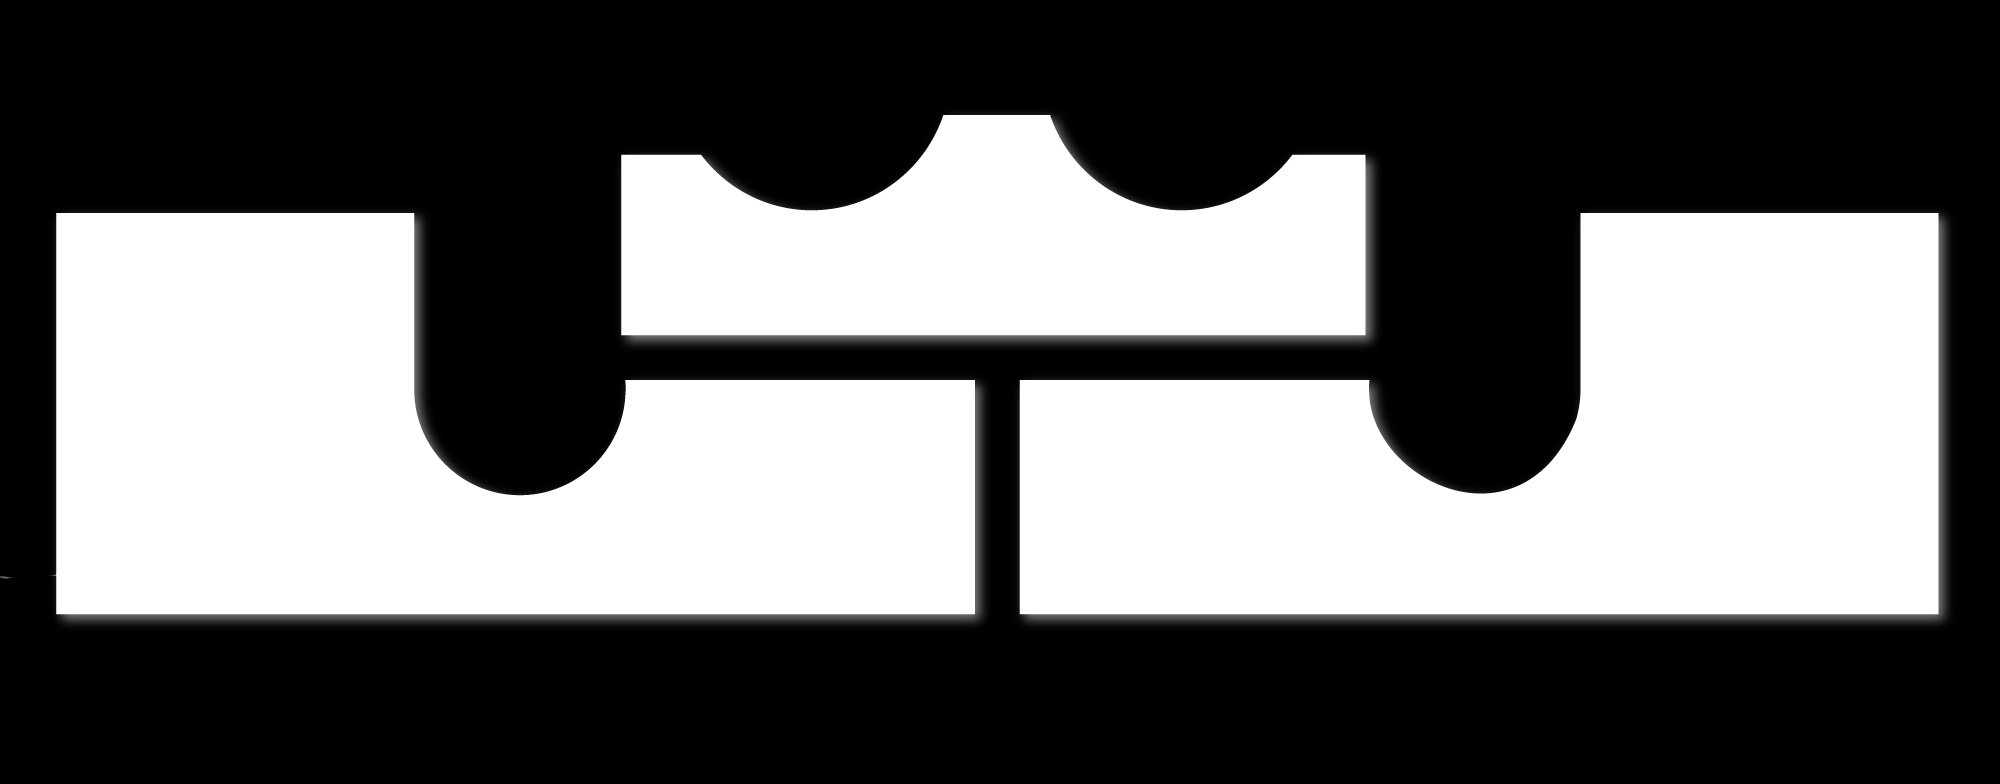 king james lebron logo